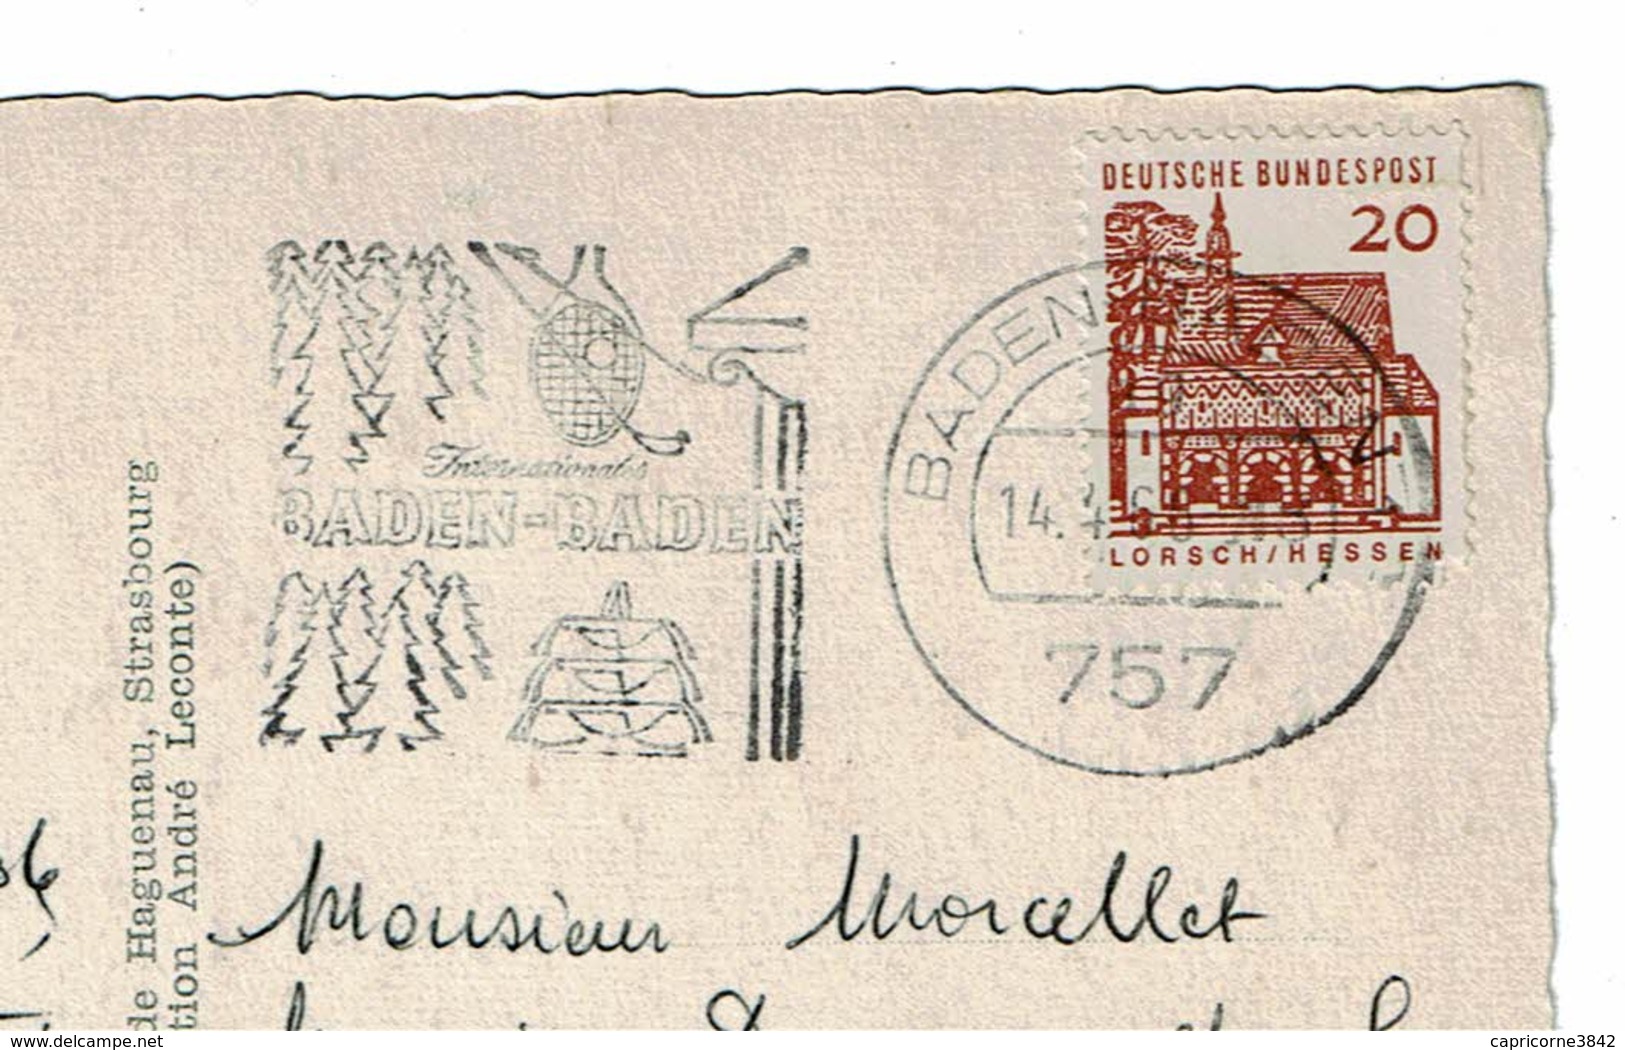 1966 - Carte Postale De BADEN BADEN Pour La France - Tp N° Yvert 324 - Maschinenstempel (EMA)